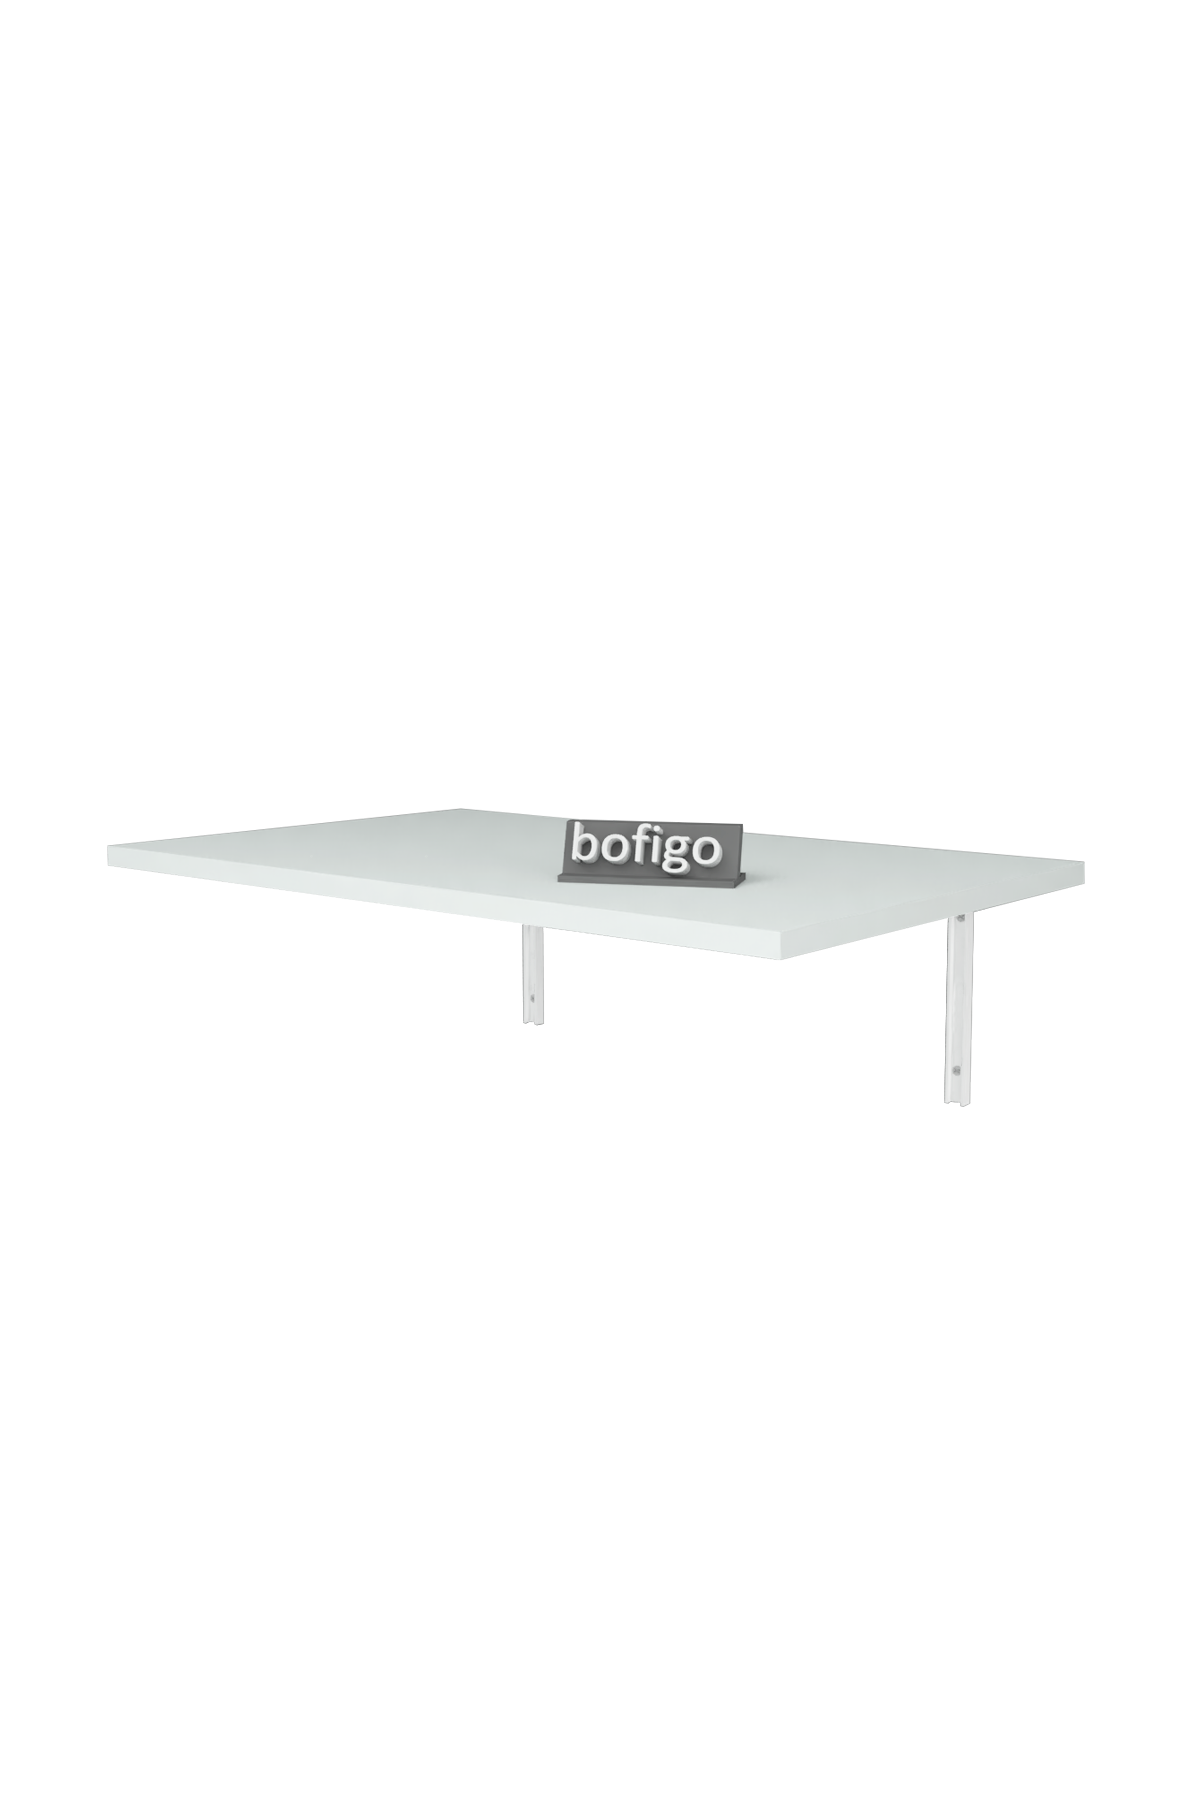 Bofigo 72 x 45 Cm Folding Table Wall Mounted Table Kitchen Table Balcony Table Study Desk